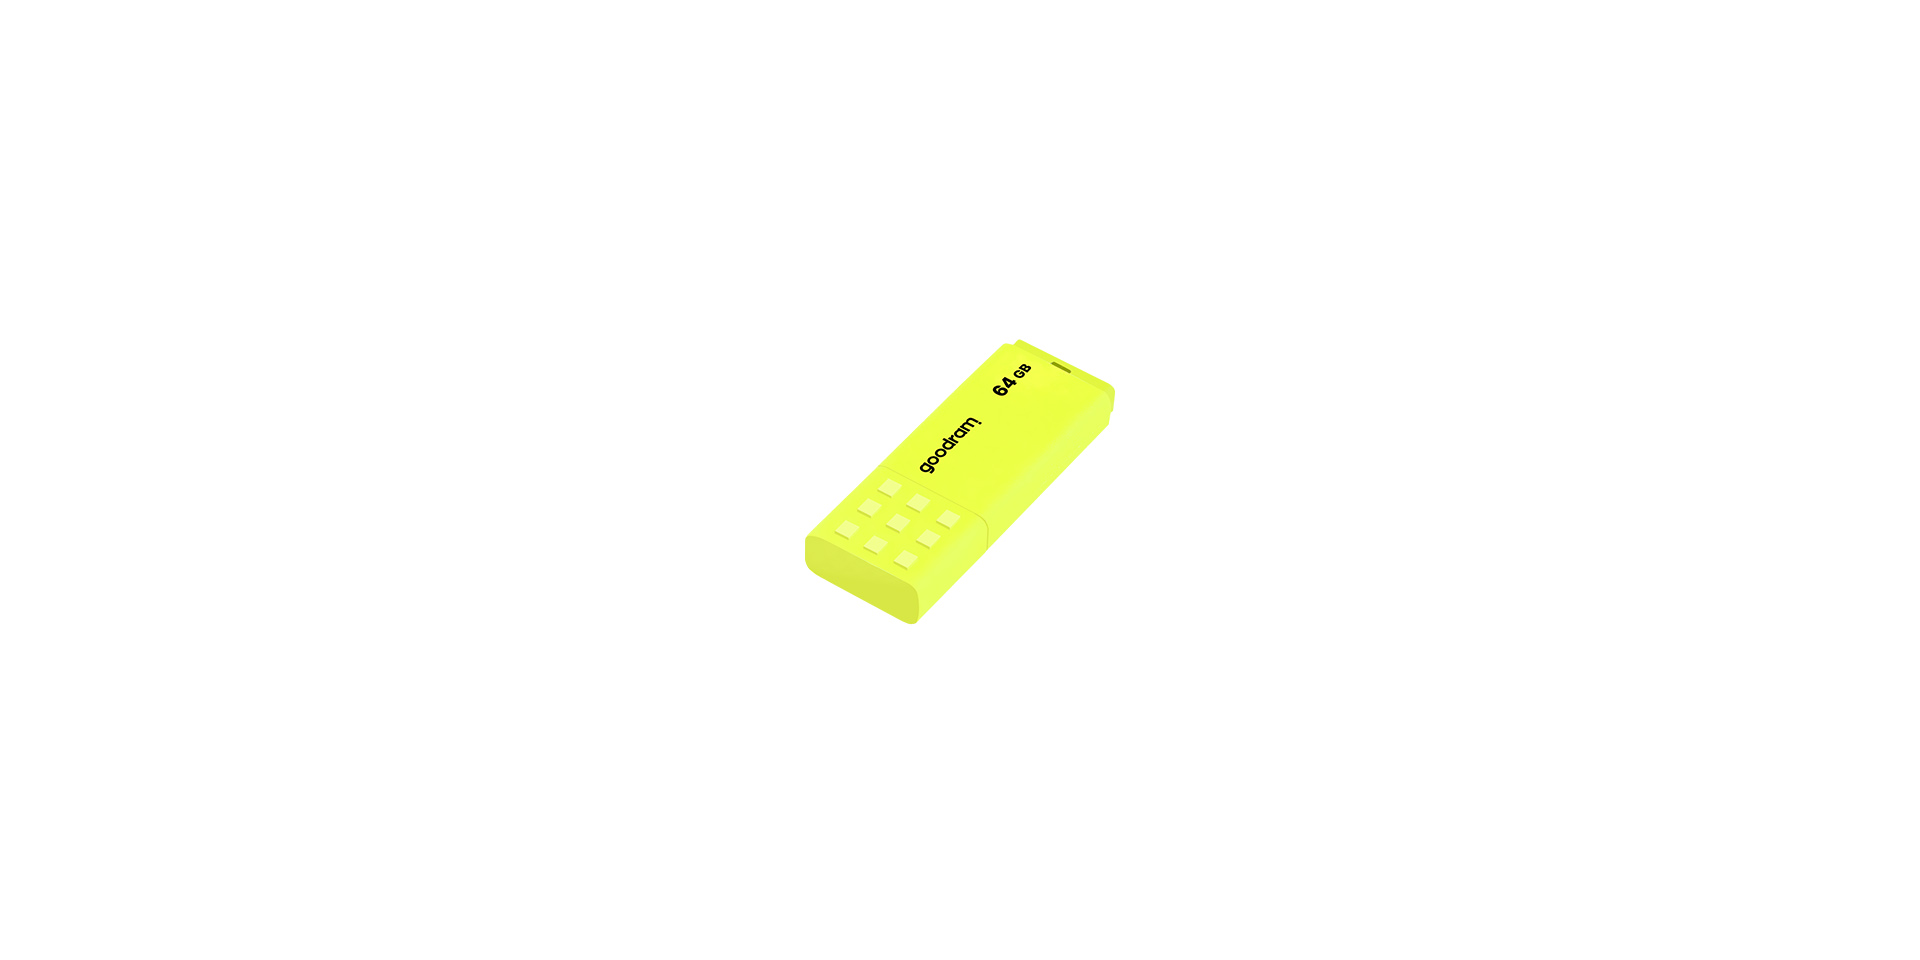 32GB USB 2.0 Yellow - UME2